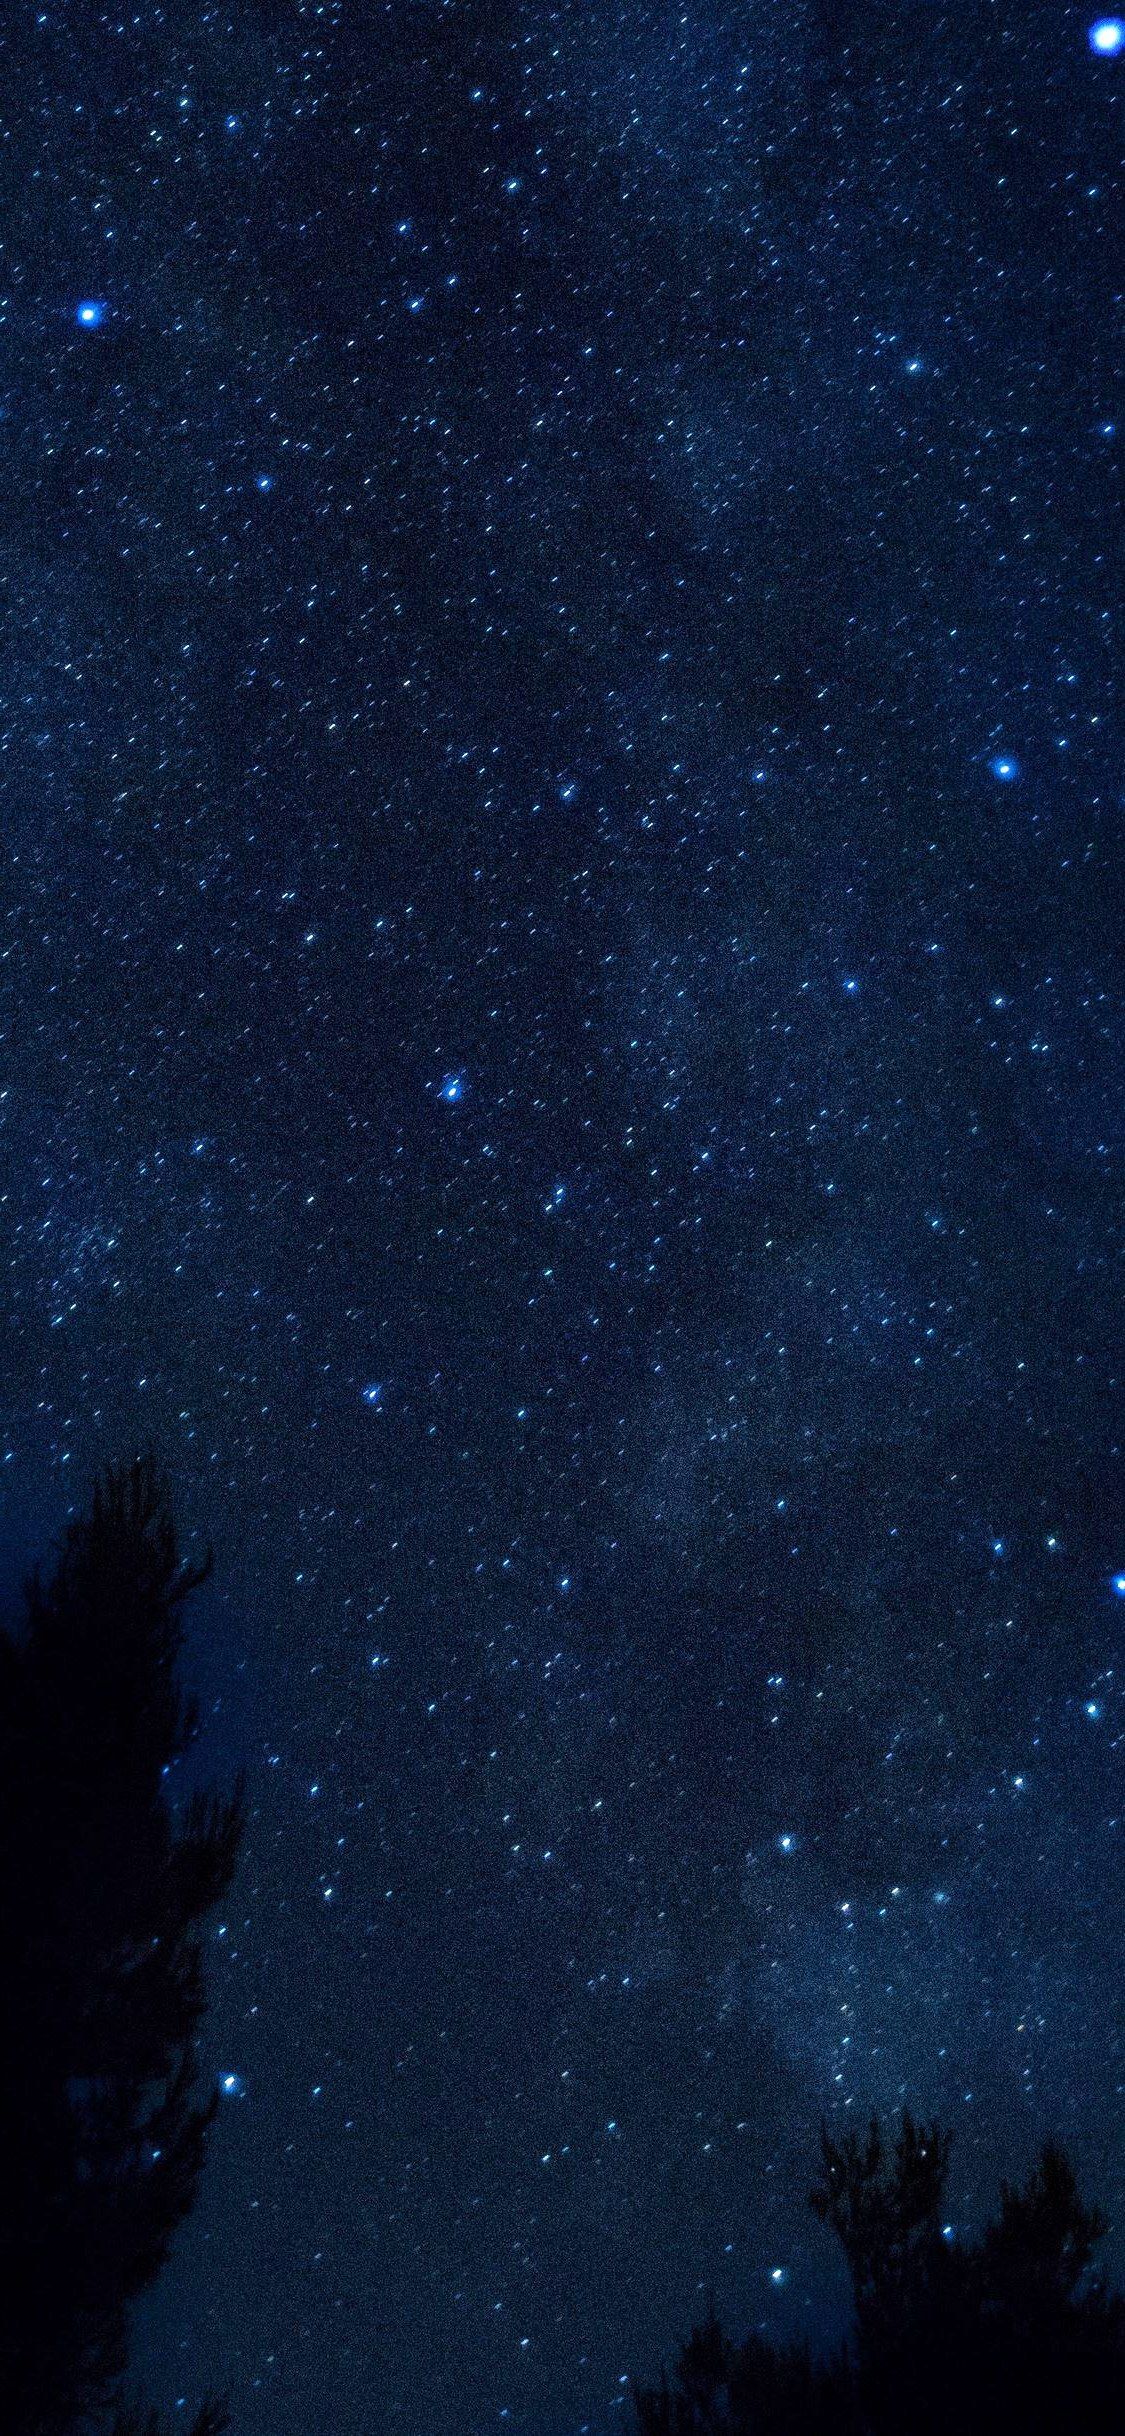 iPhone X Wallpaper Starry sky night trees HD. Night sky wallpaper, Night sky photography, Starry night sky